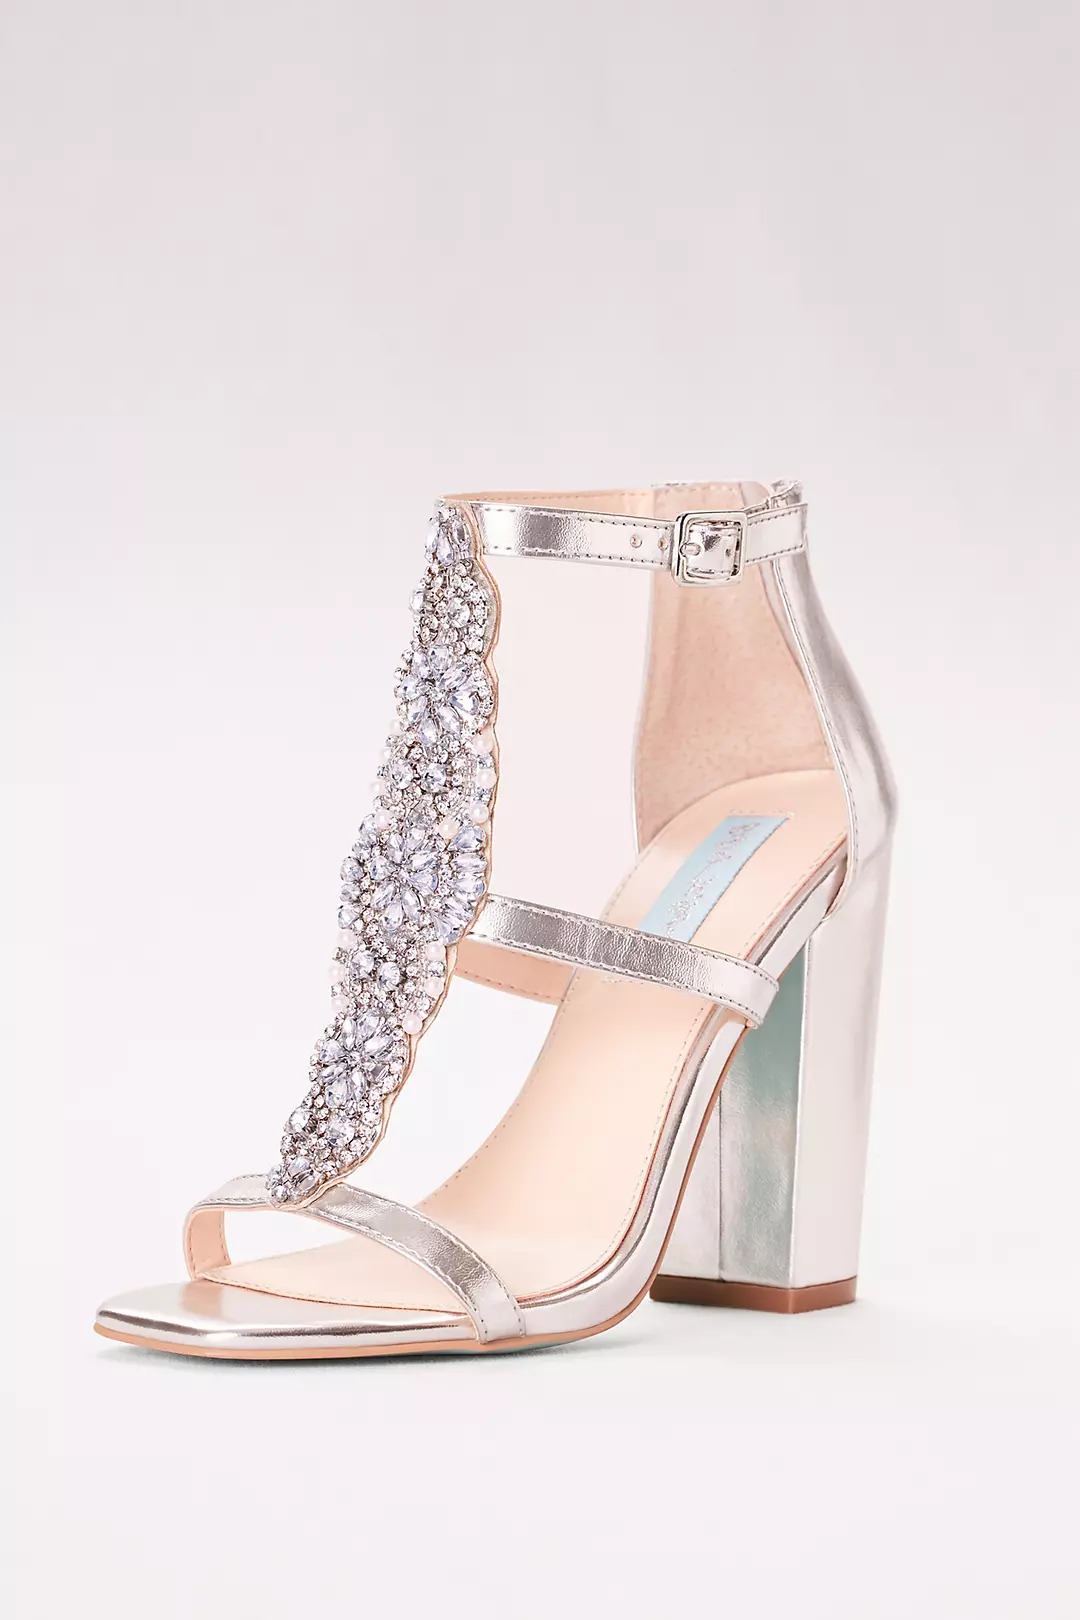 Crystal T-Strap High Heel Sandals with Block Heel Image